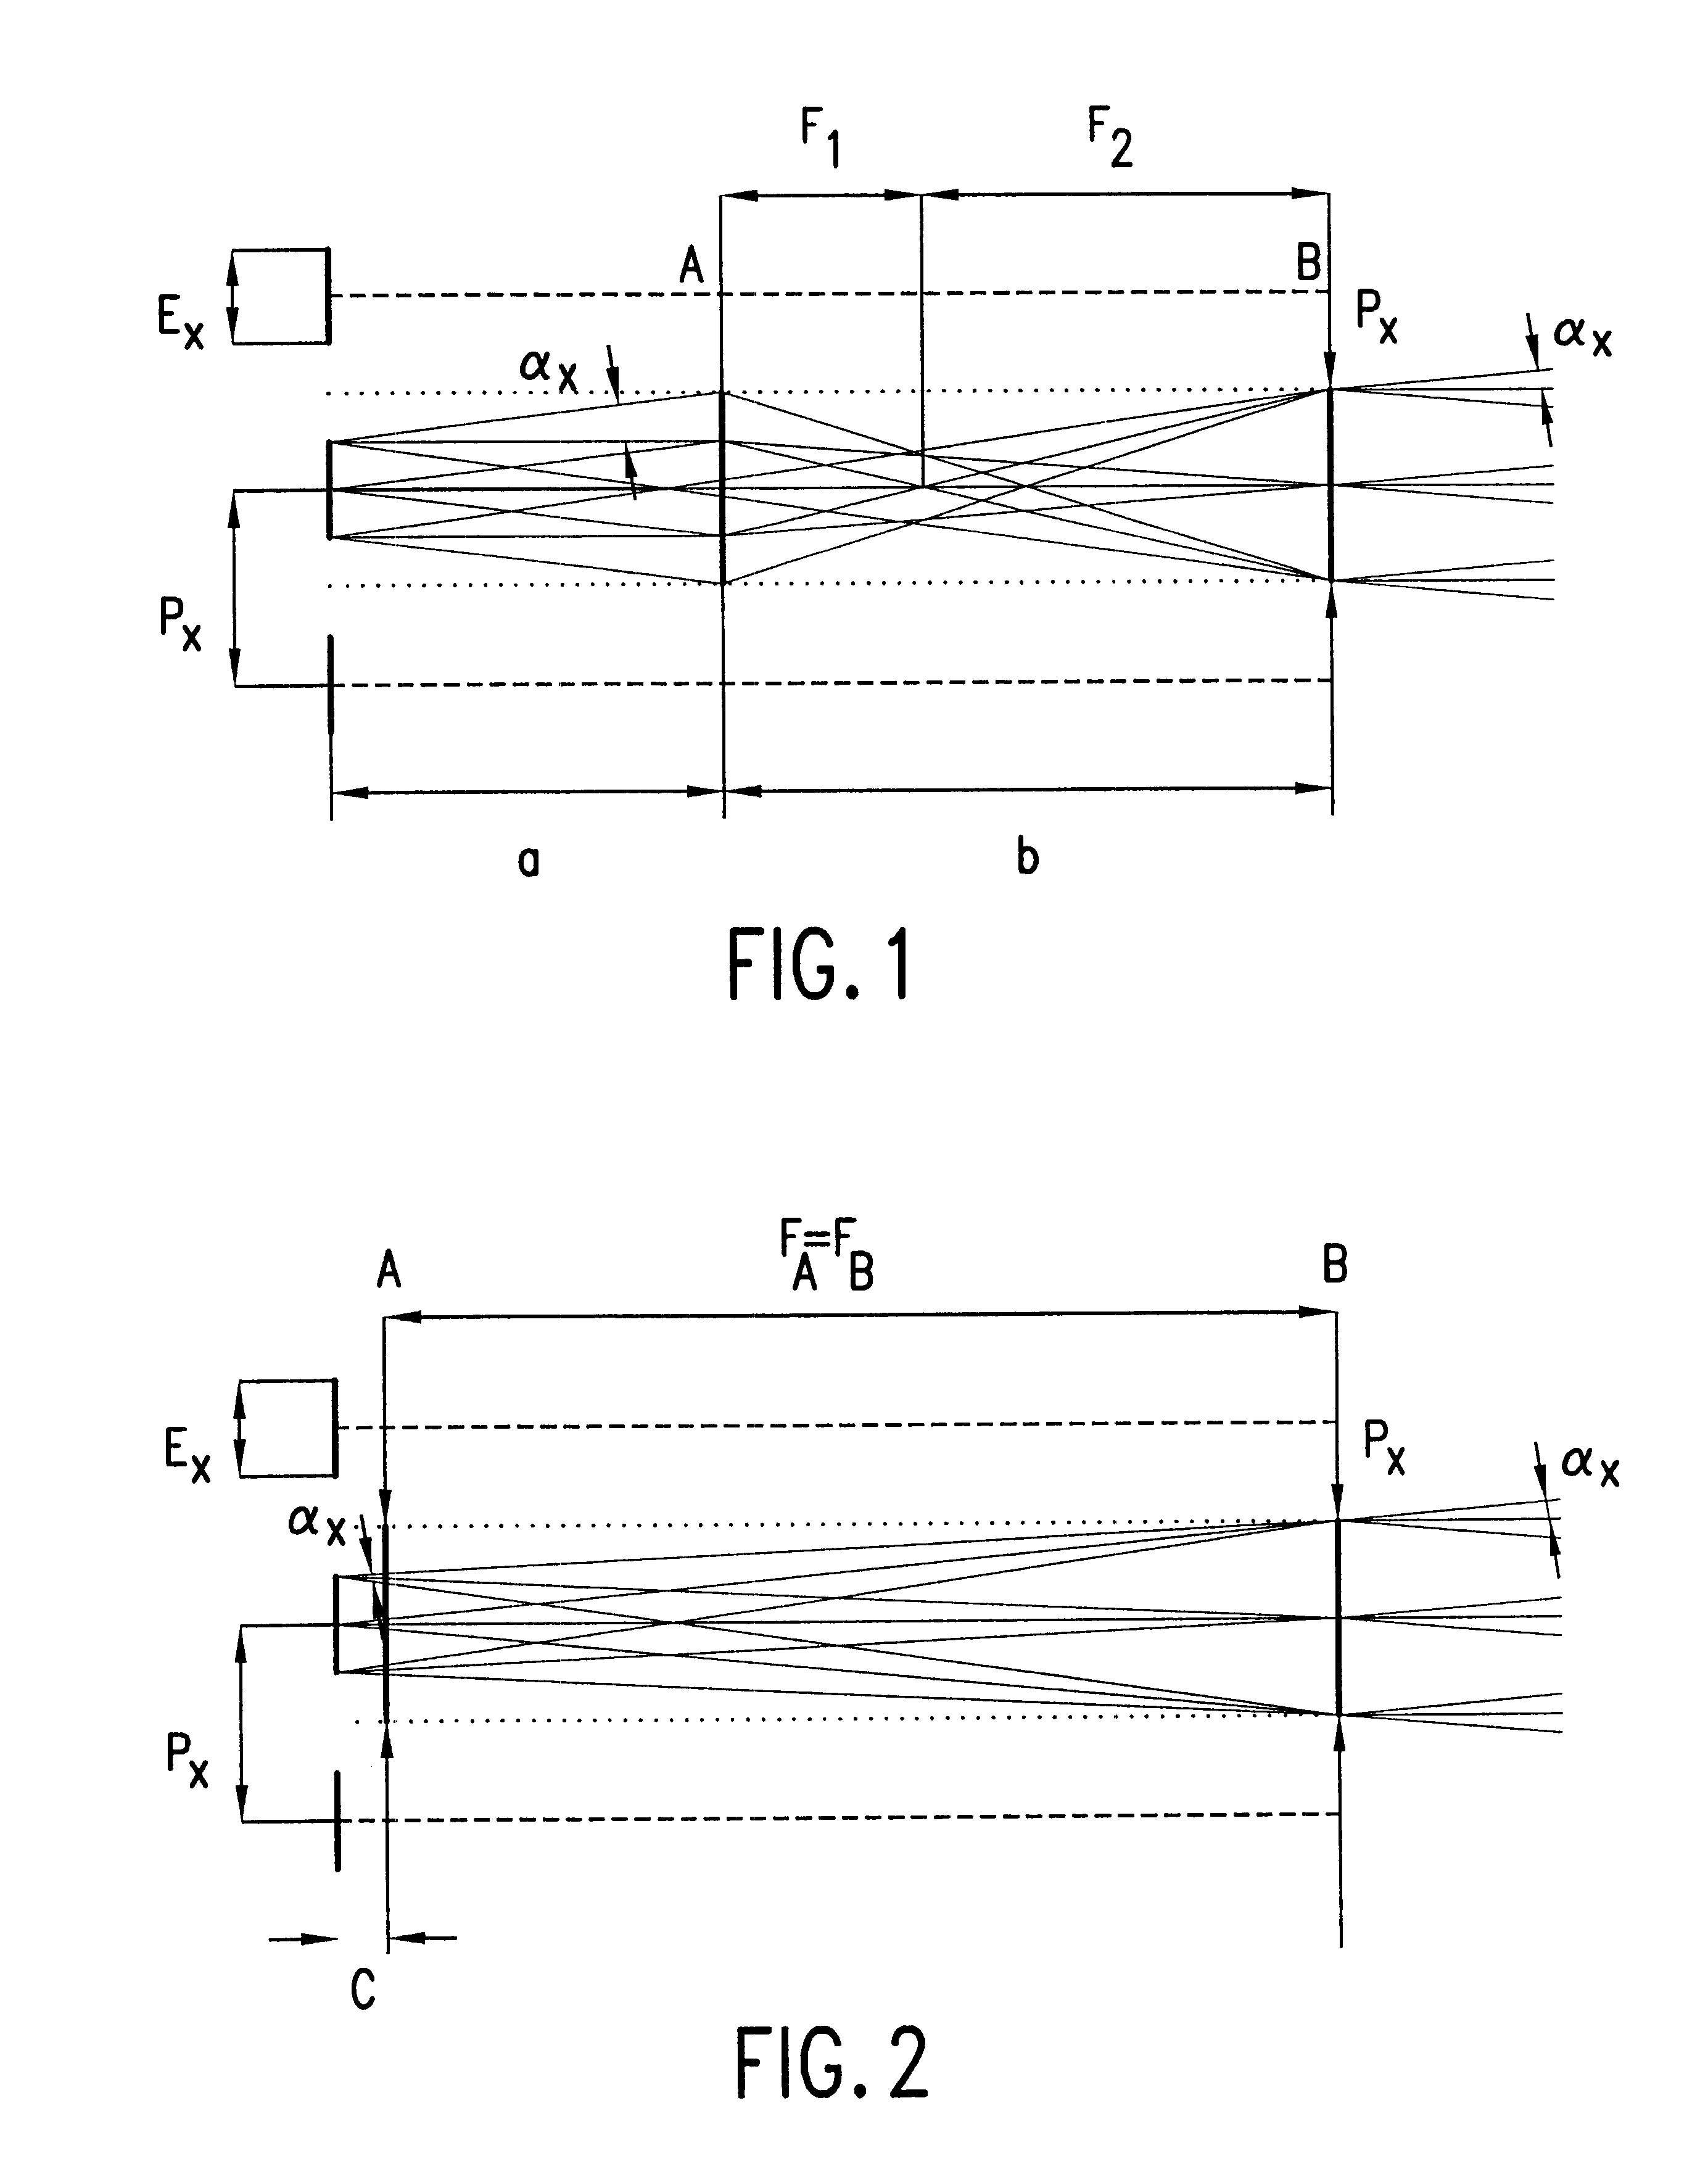 Optical emitter array with collimating optics unit